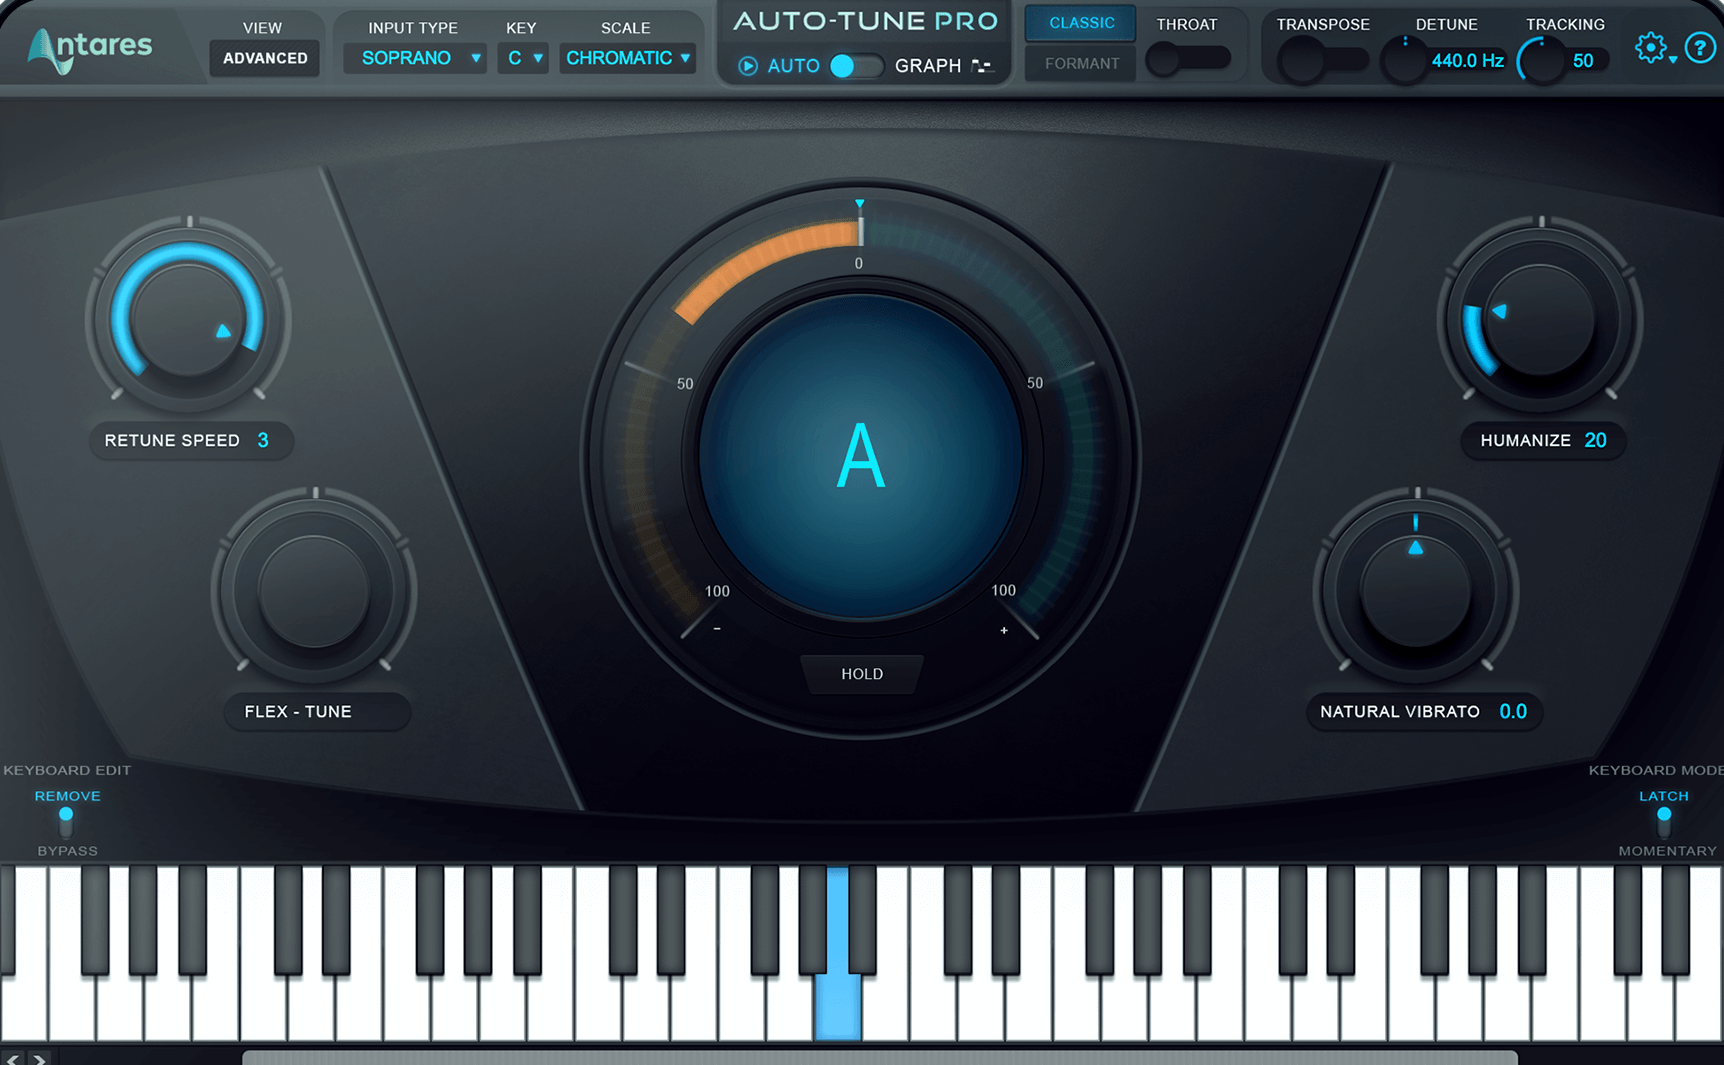 Antares Auto-Tune Pro 9.1.0